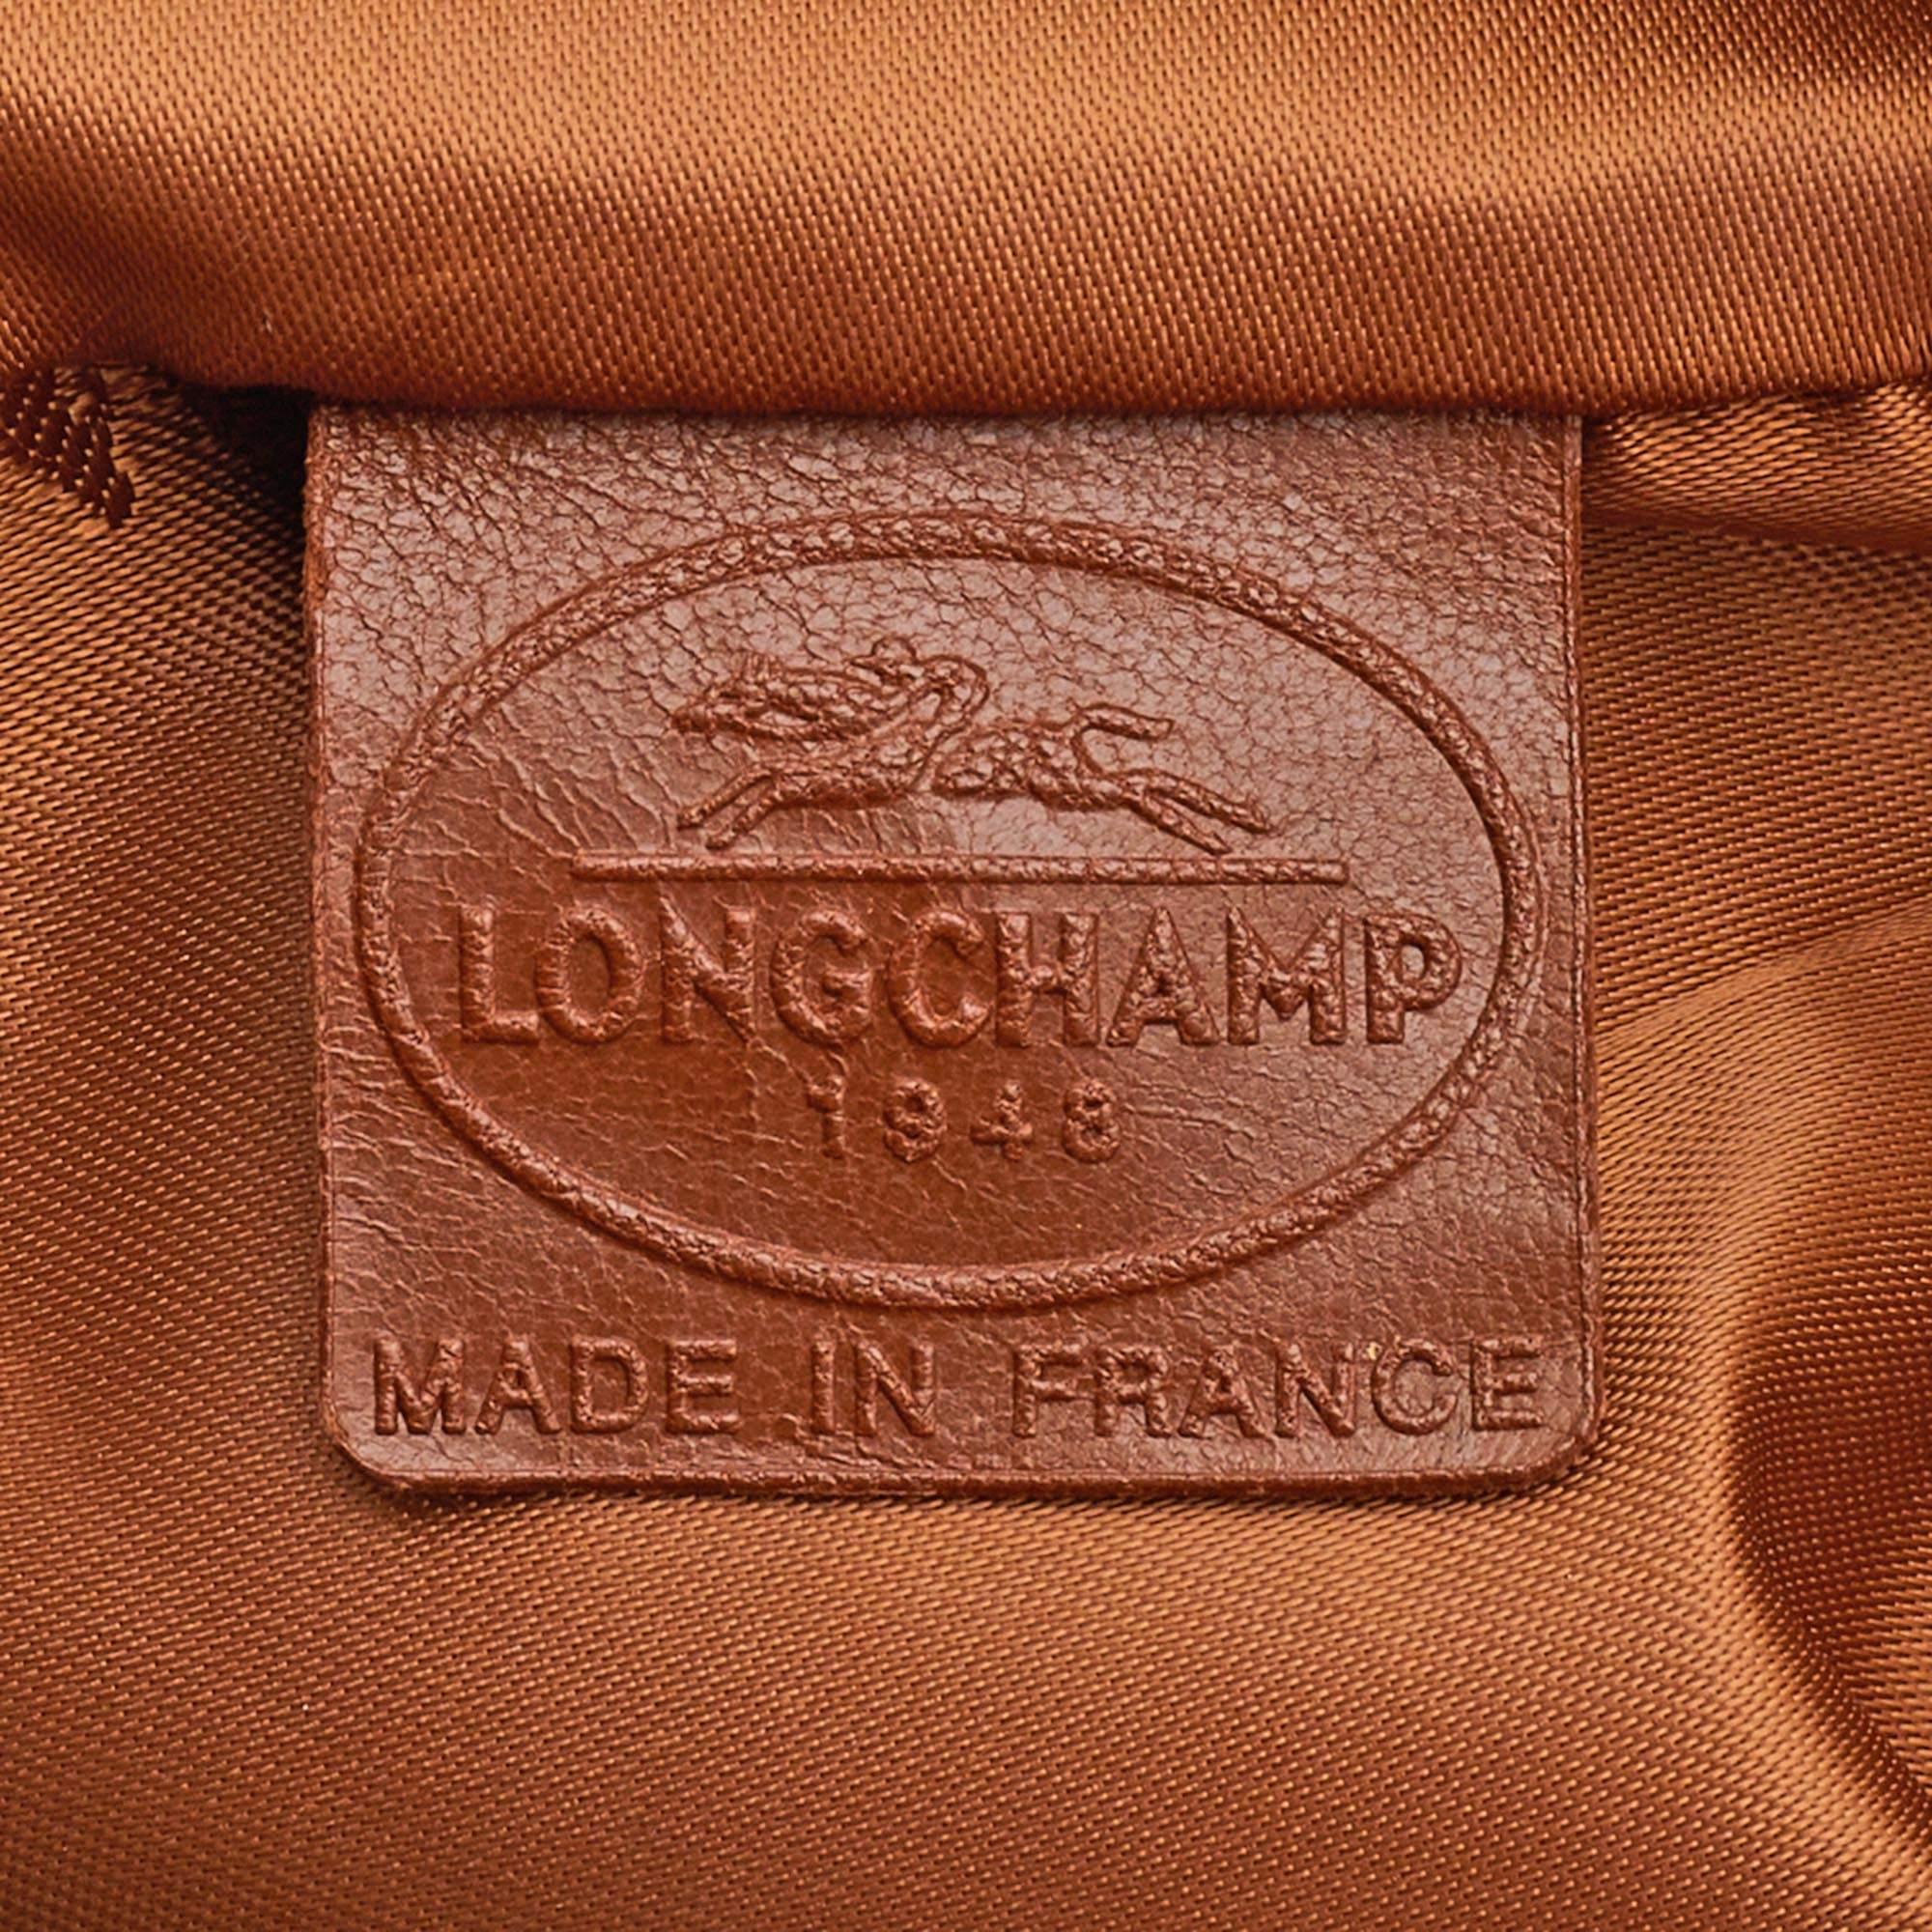 Longchamp Mustard Leather Large 3d Shopper Tote 7